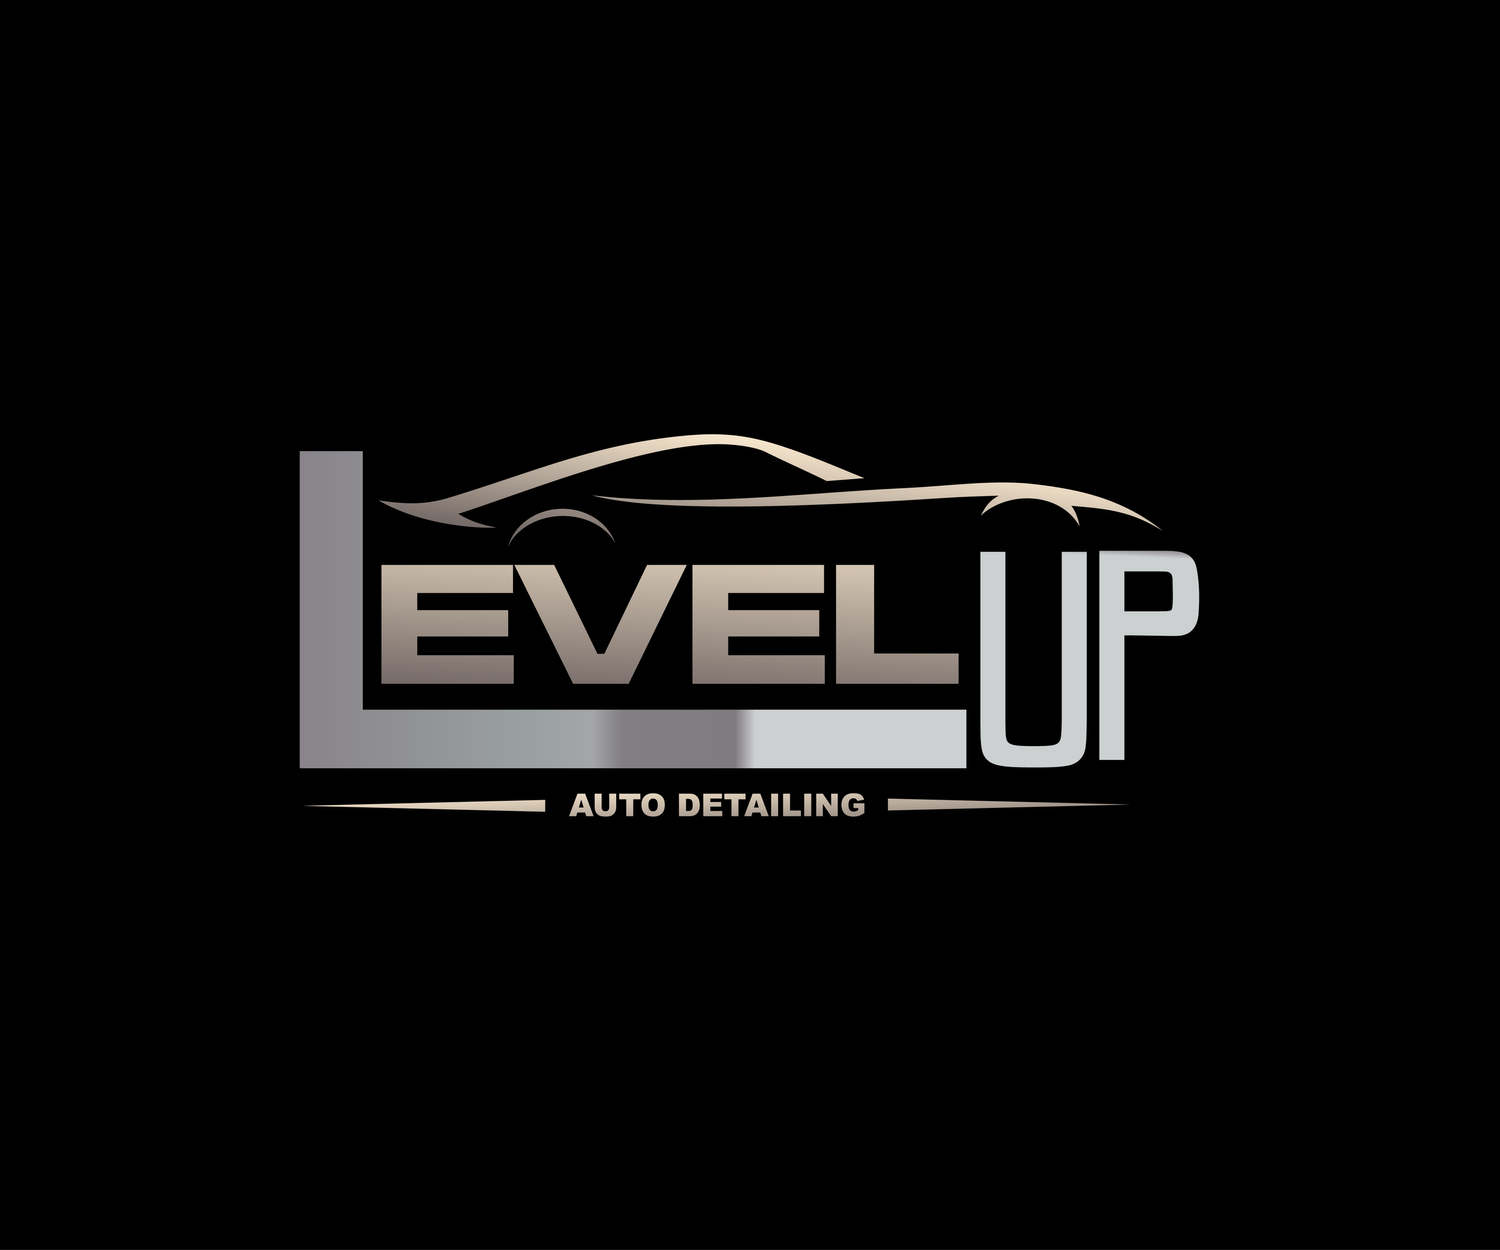 Level Up Auto Detailing